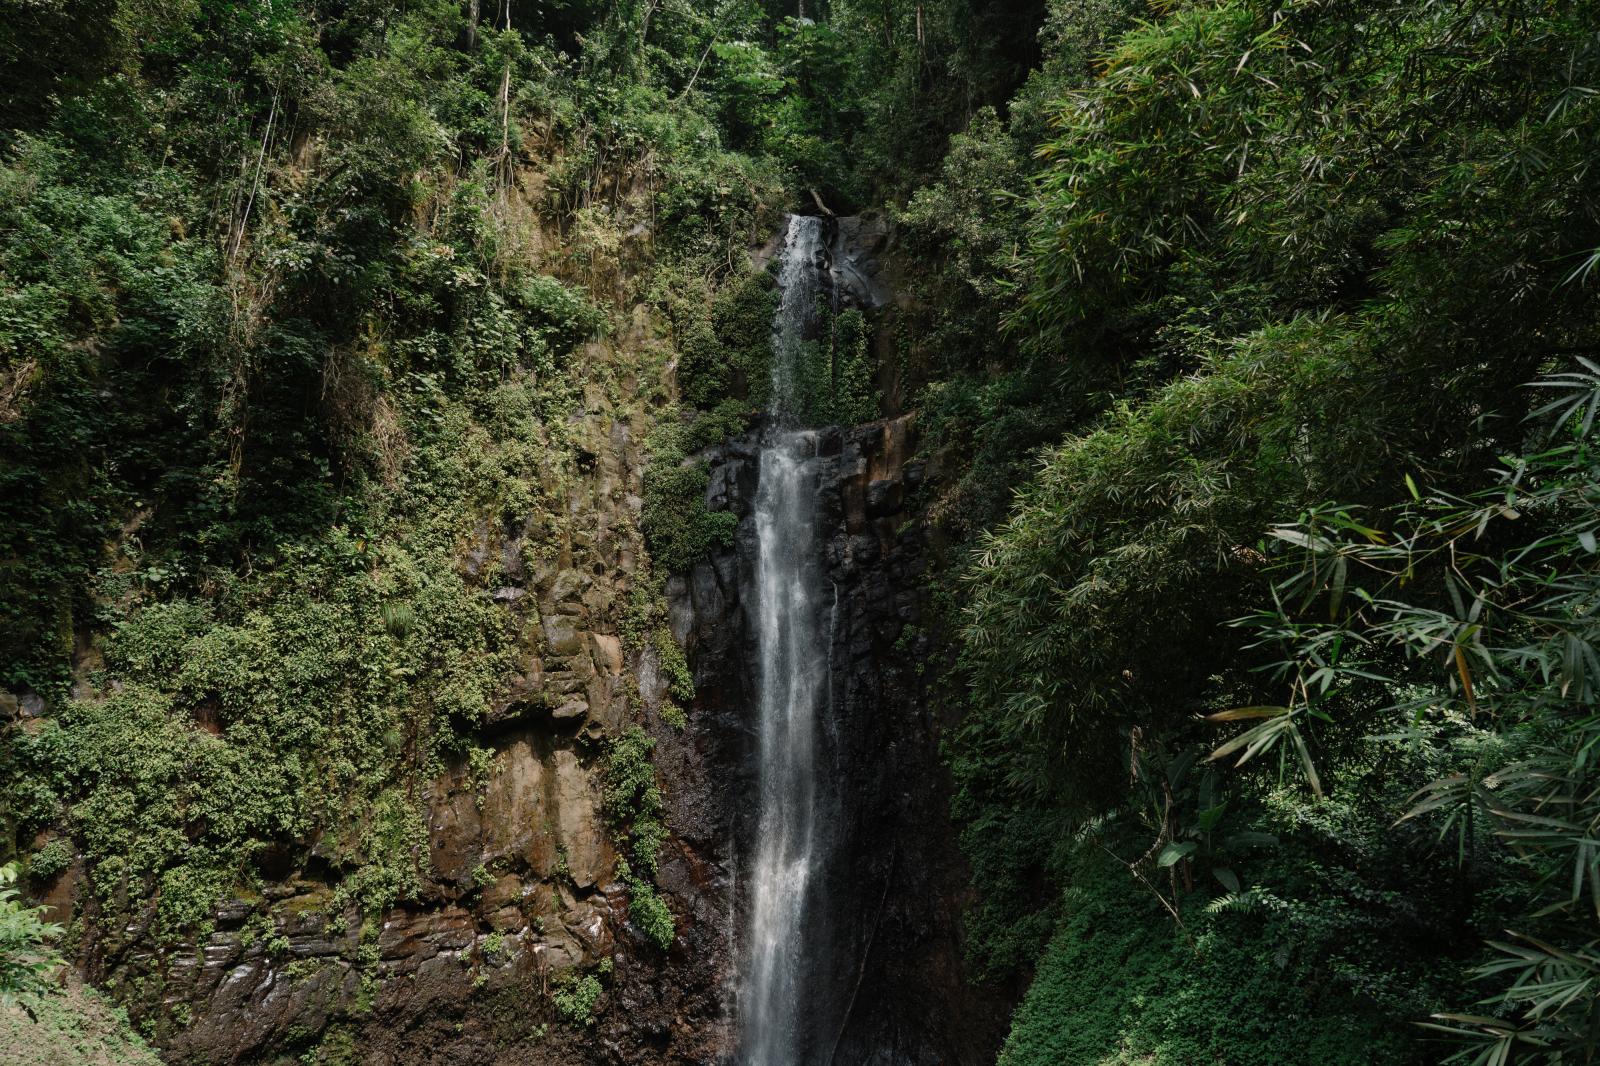 Waterfall | Buy this image